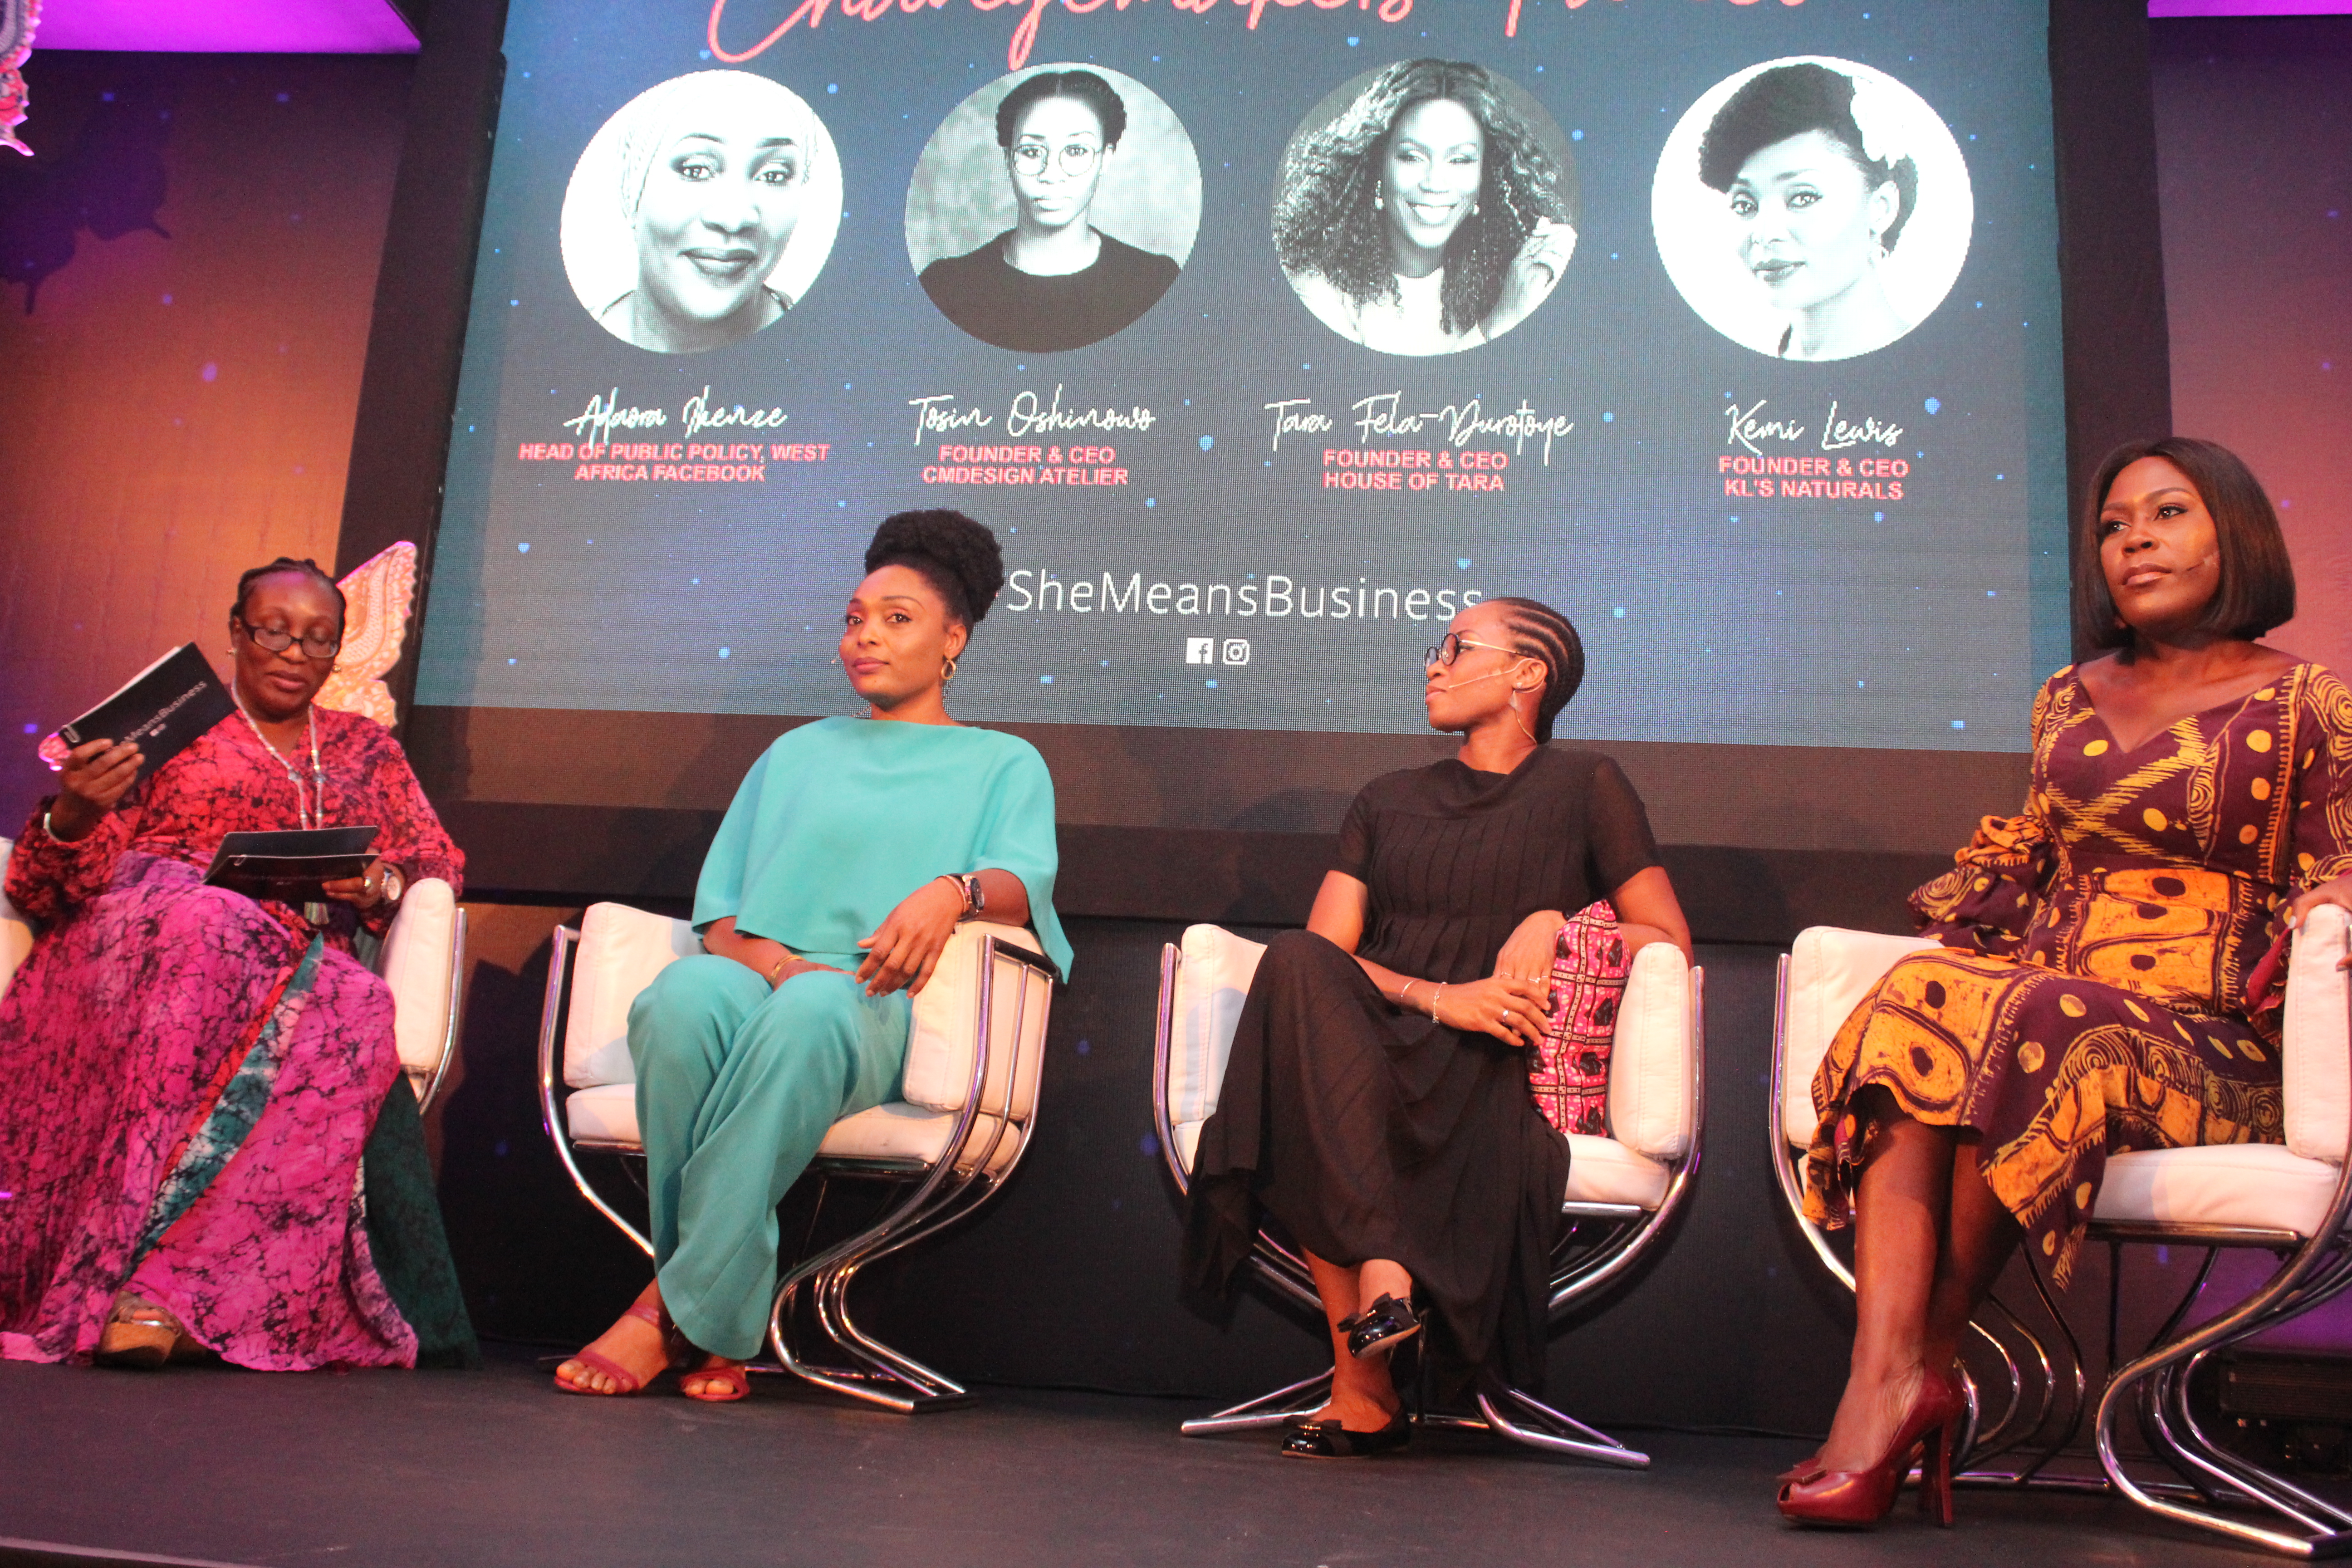 jaiyeorie + Facebook hosts female Nigerian entrepreneurs in an evening of #shemeansbusiness